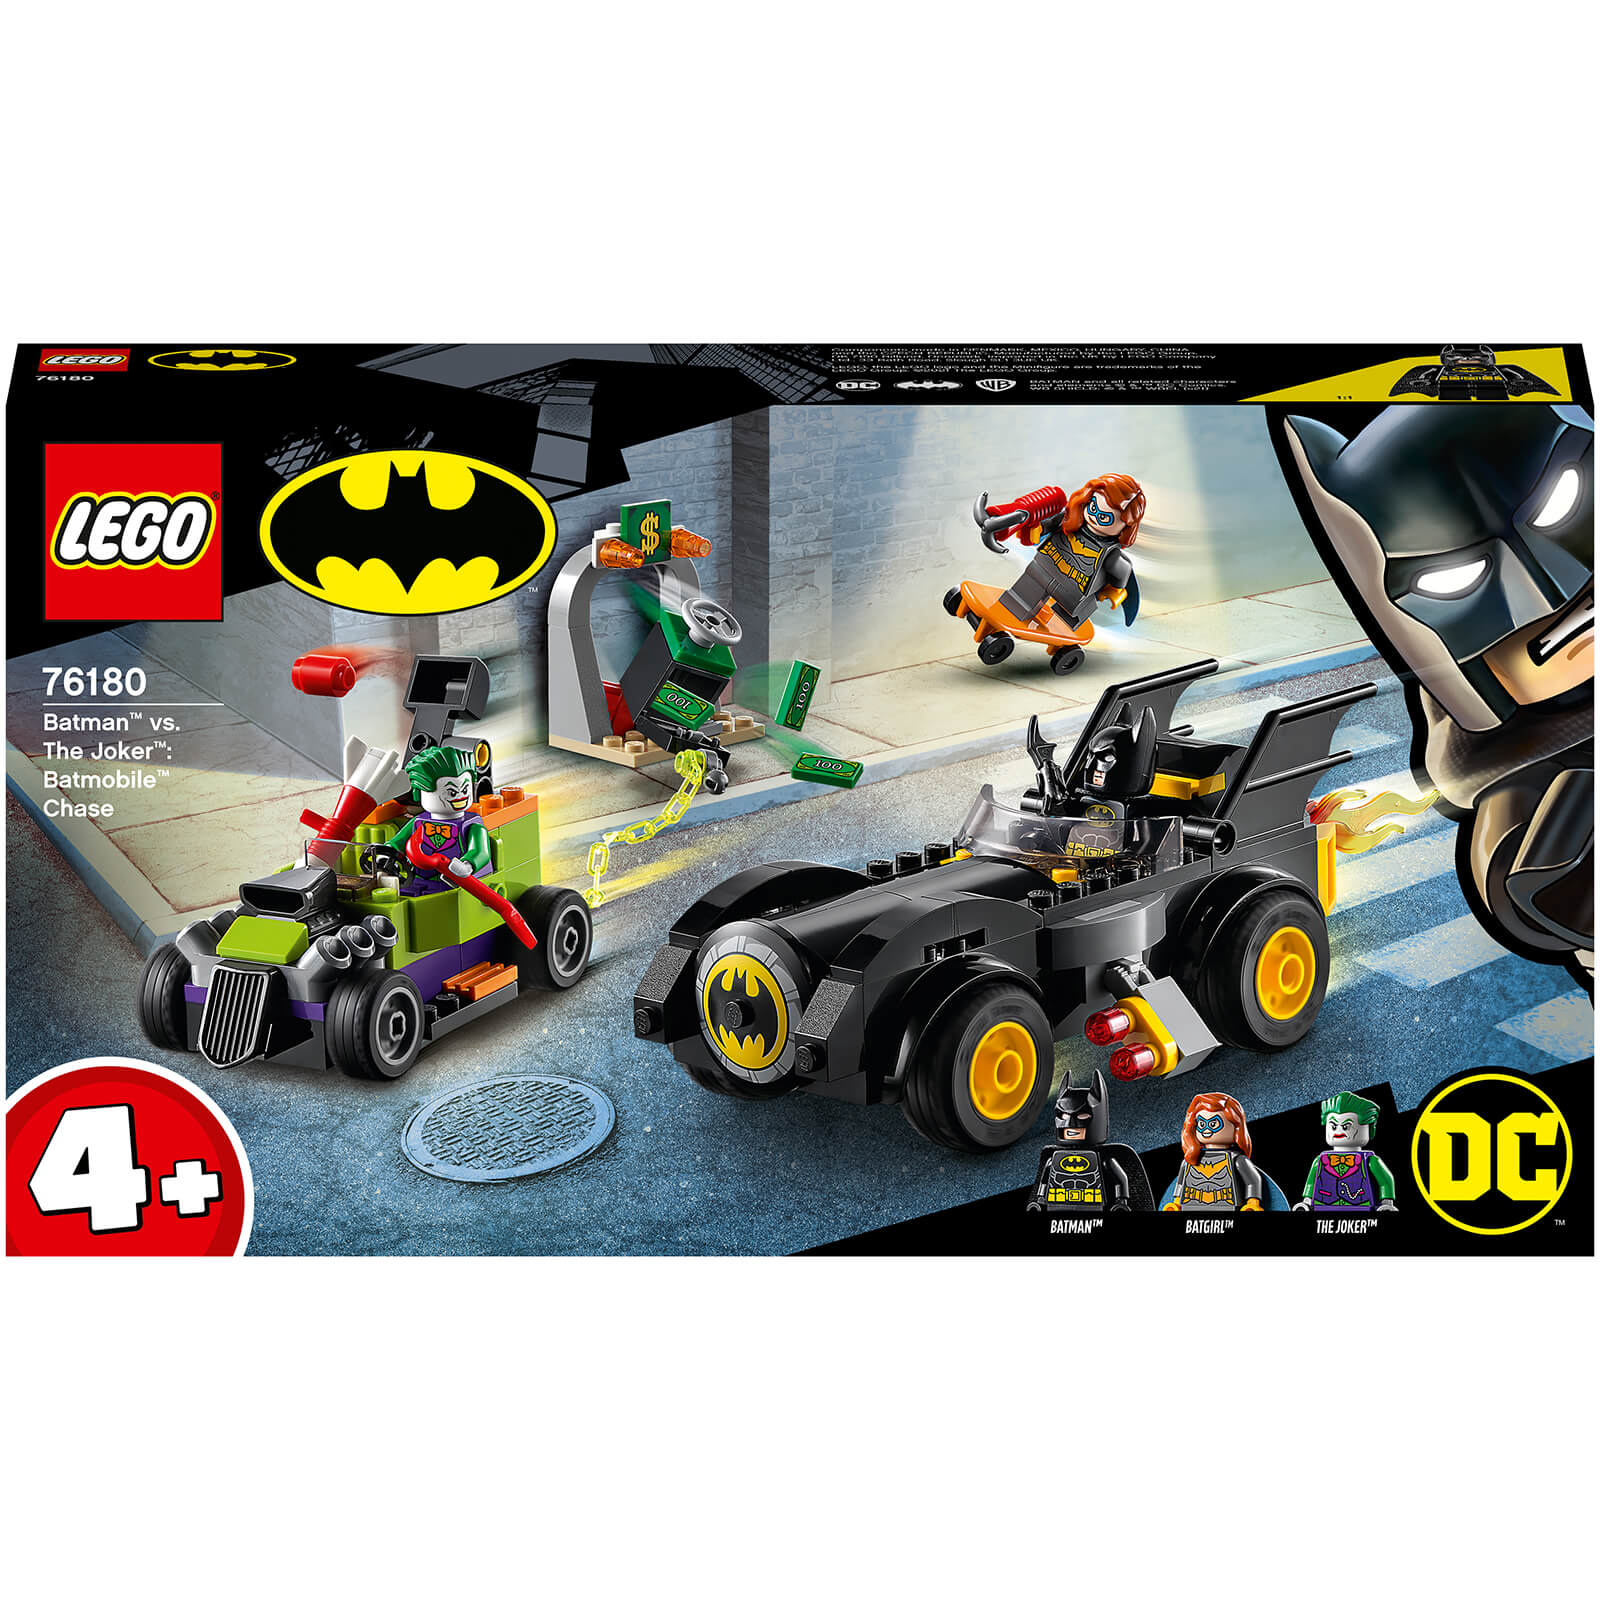 LEGO DC Batman vs. LEGO DC Batman El Joker: Batmobile Chase Toy Car (76180)